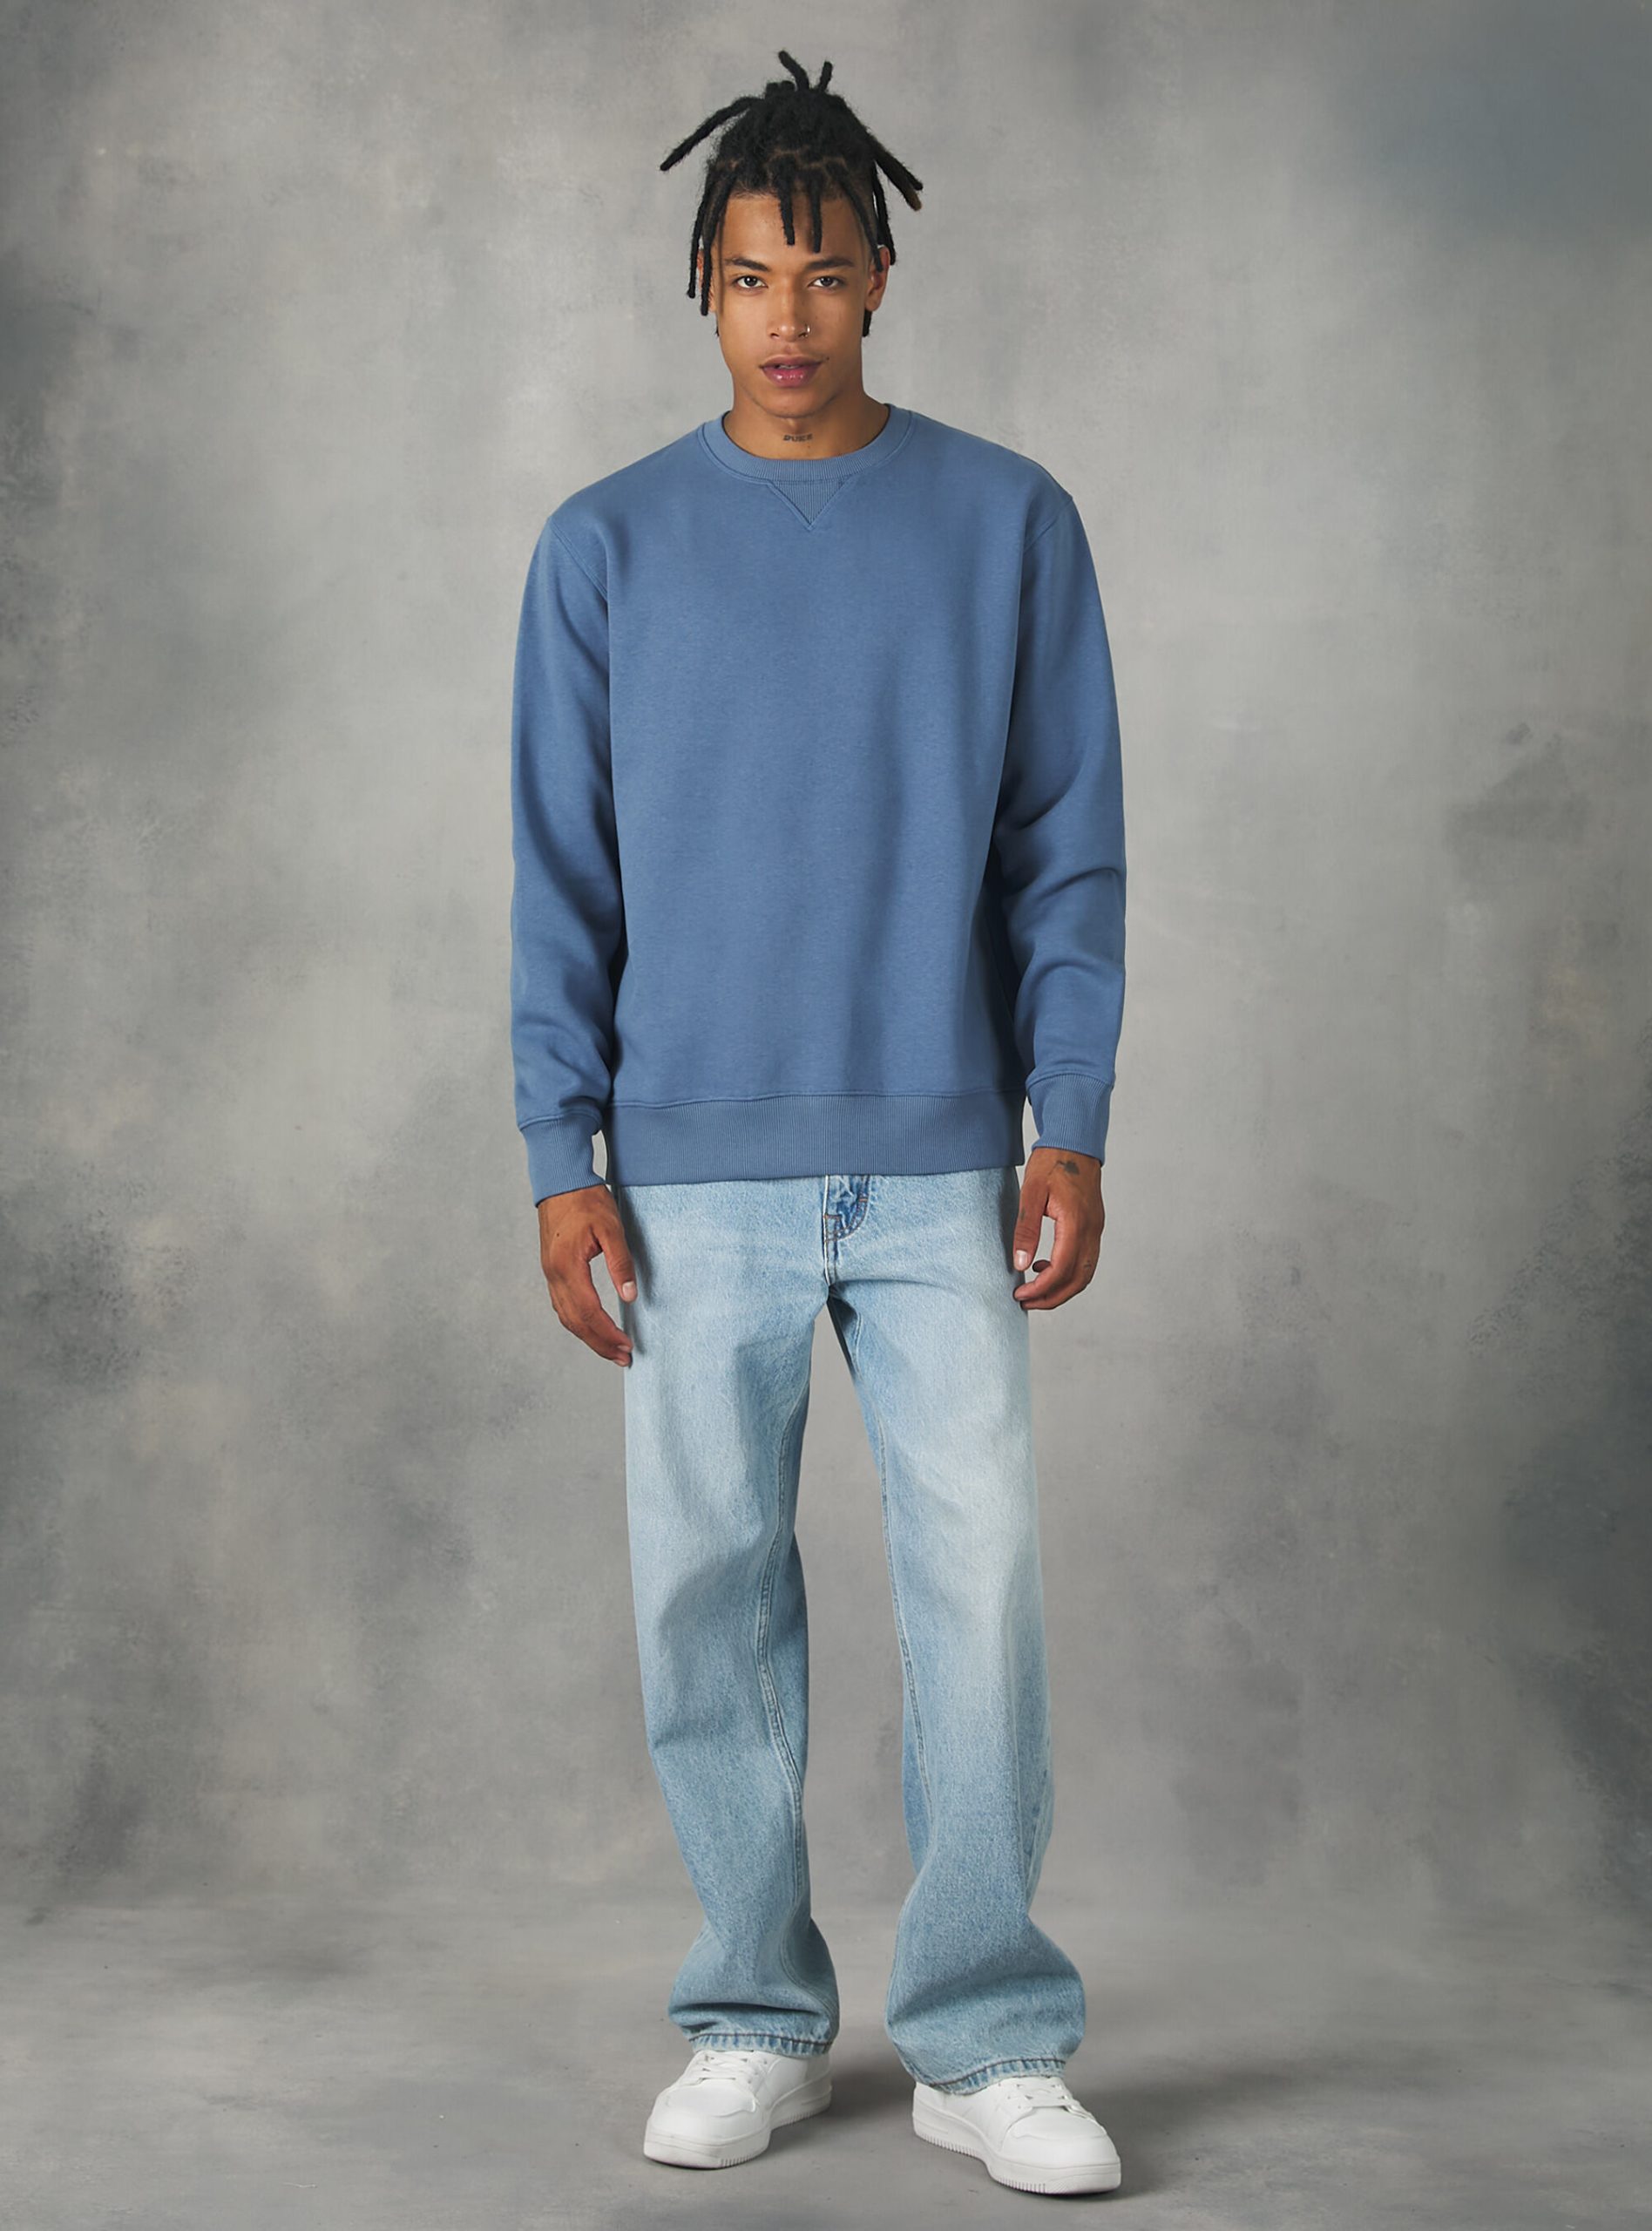 Bl3 Blue Light Männer Sweatshirts Alcott Sonderangebot Plain-Coloured Crew-Neck Sweatshirt – 2